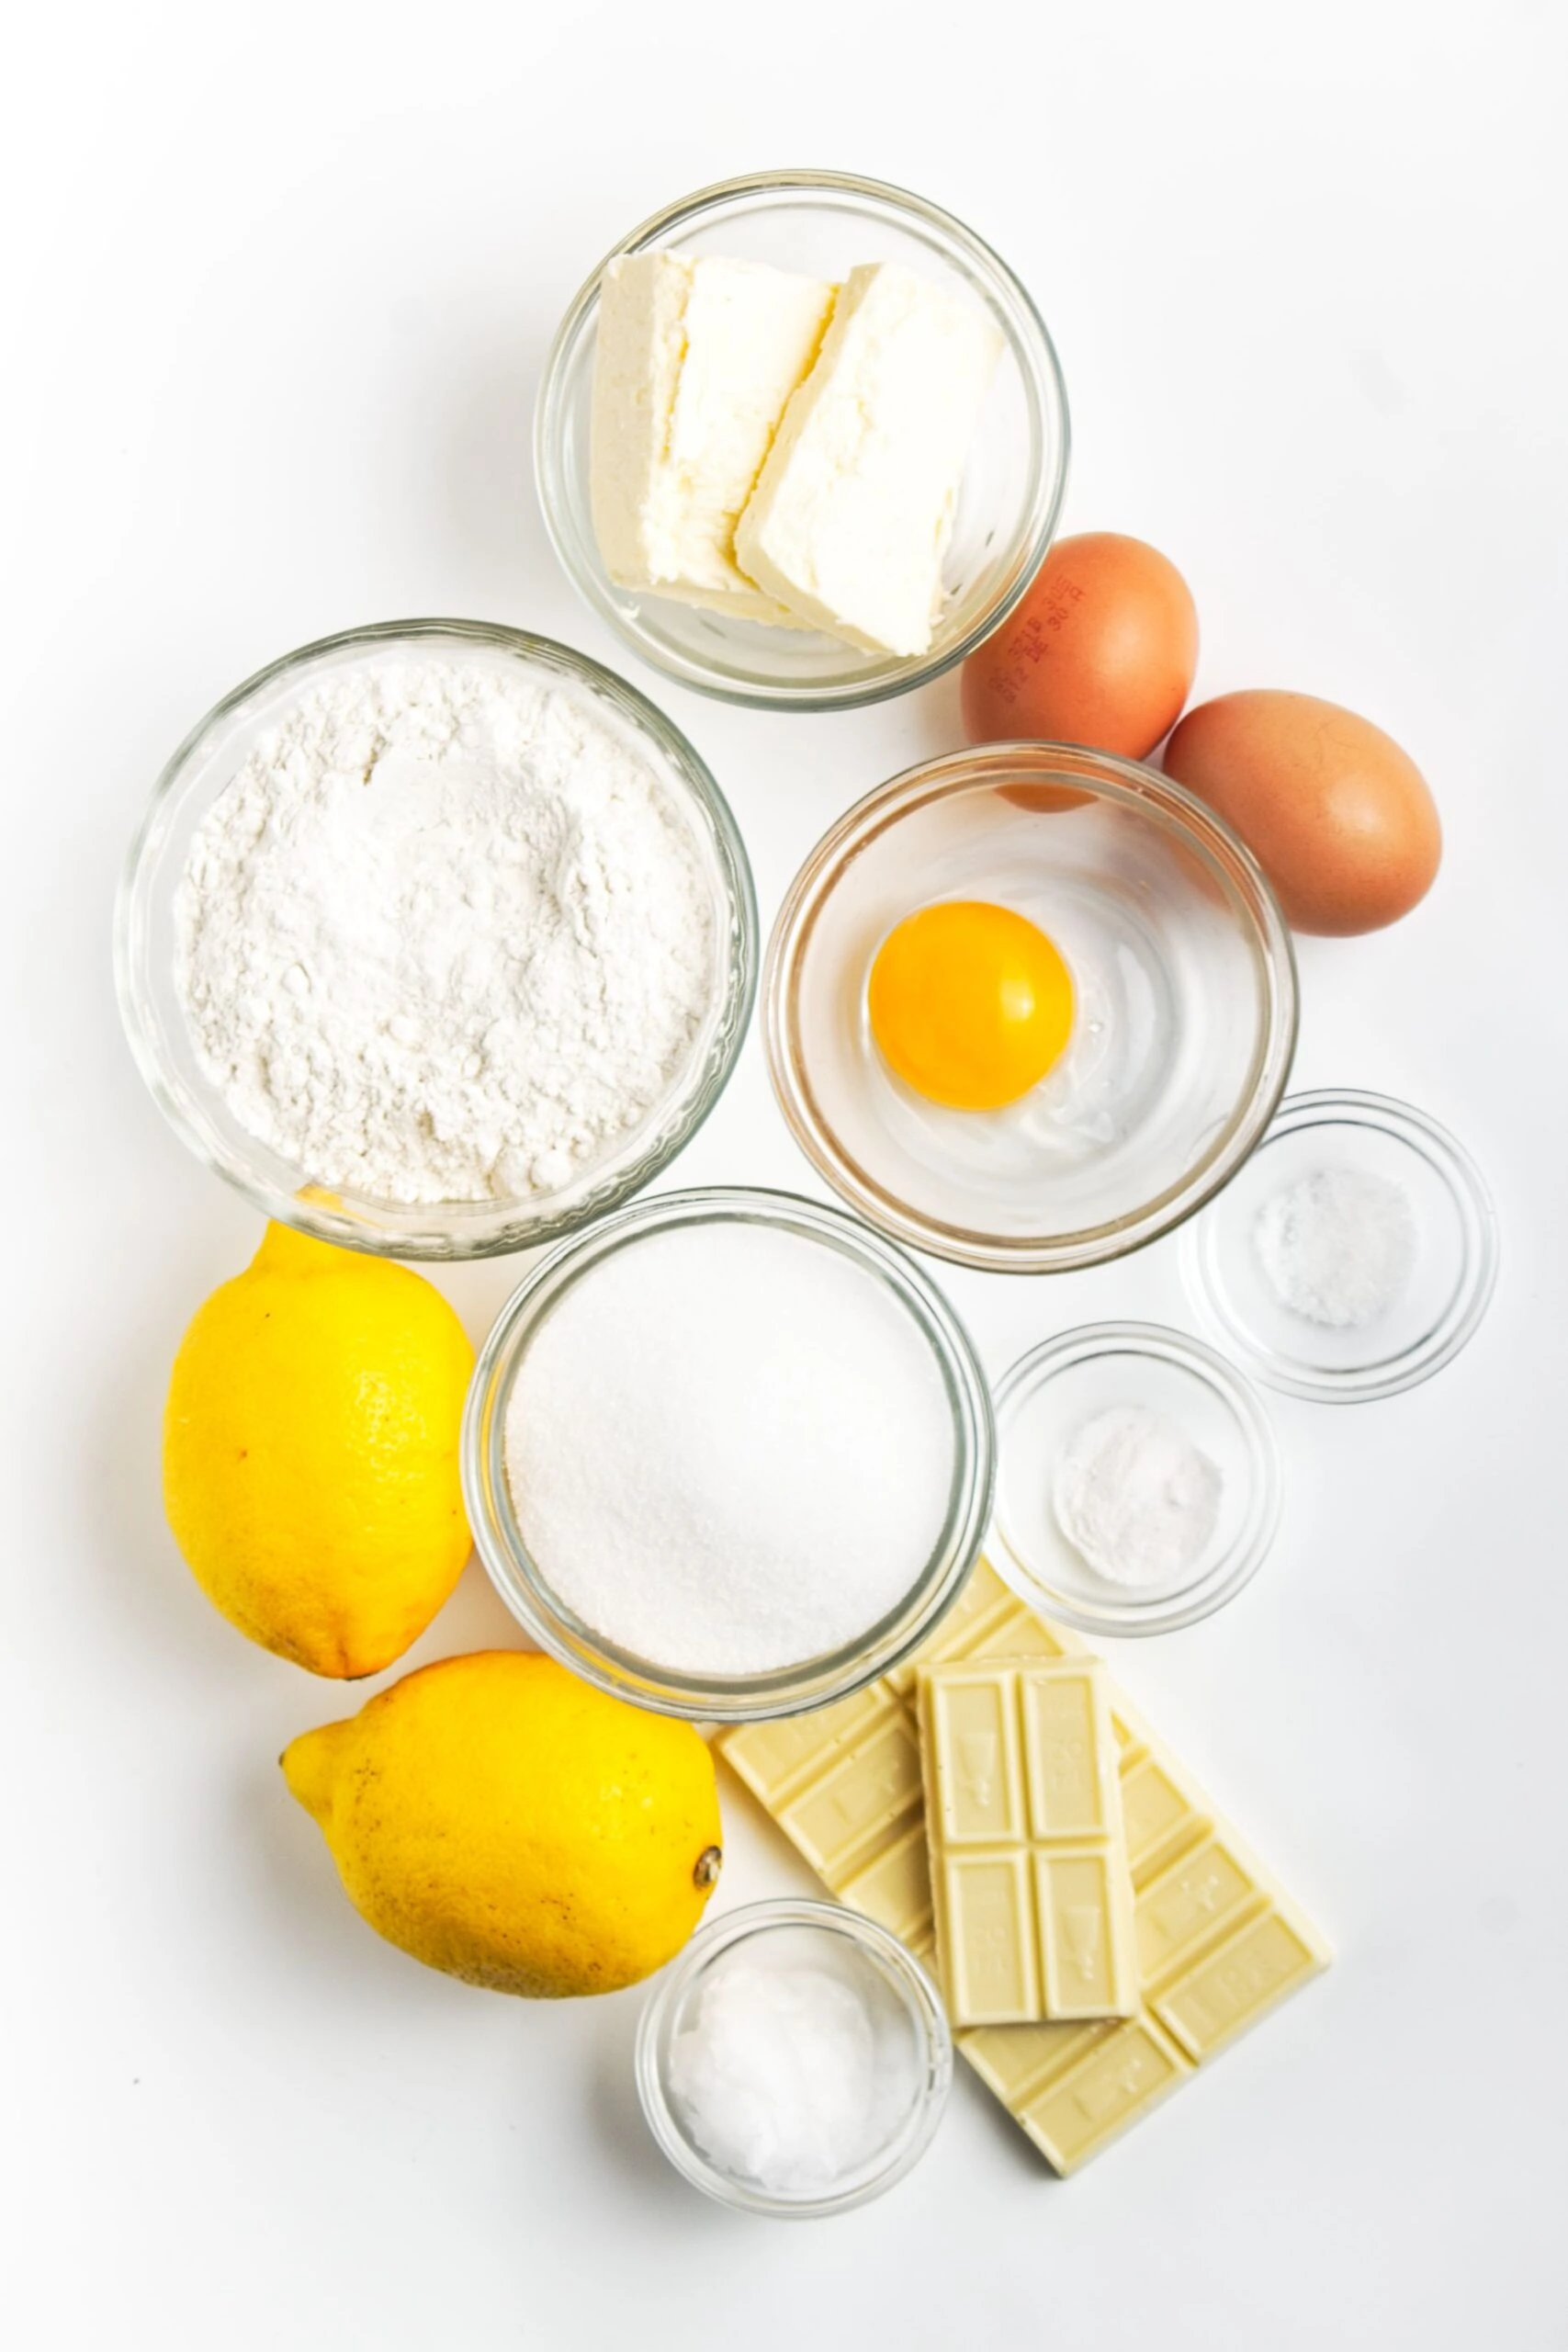 Ingredients for Lemon Madeleines